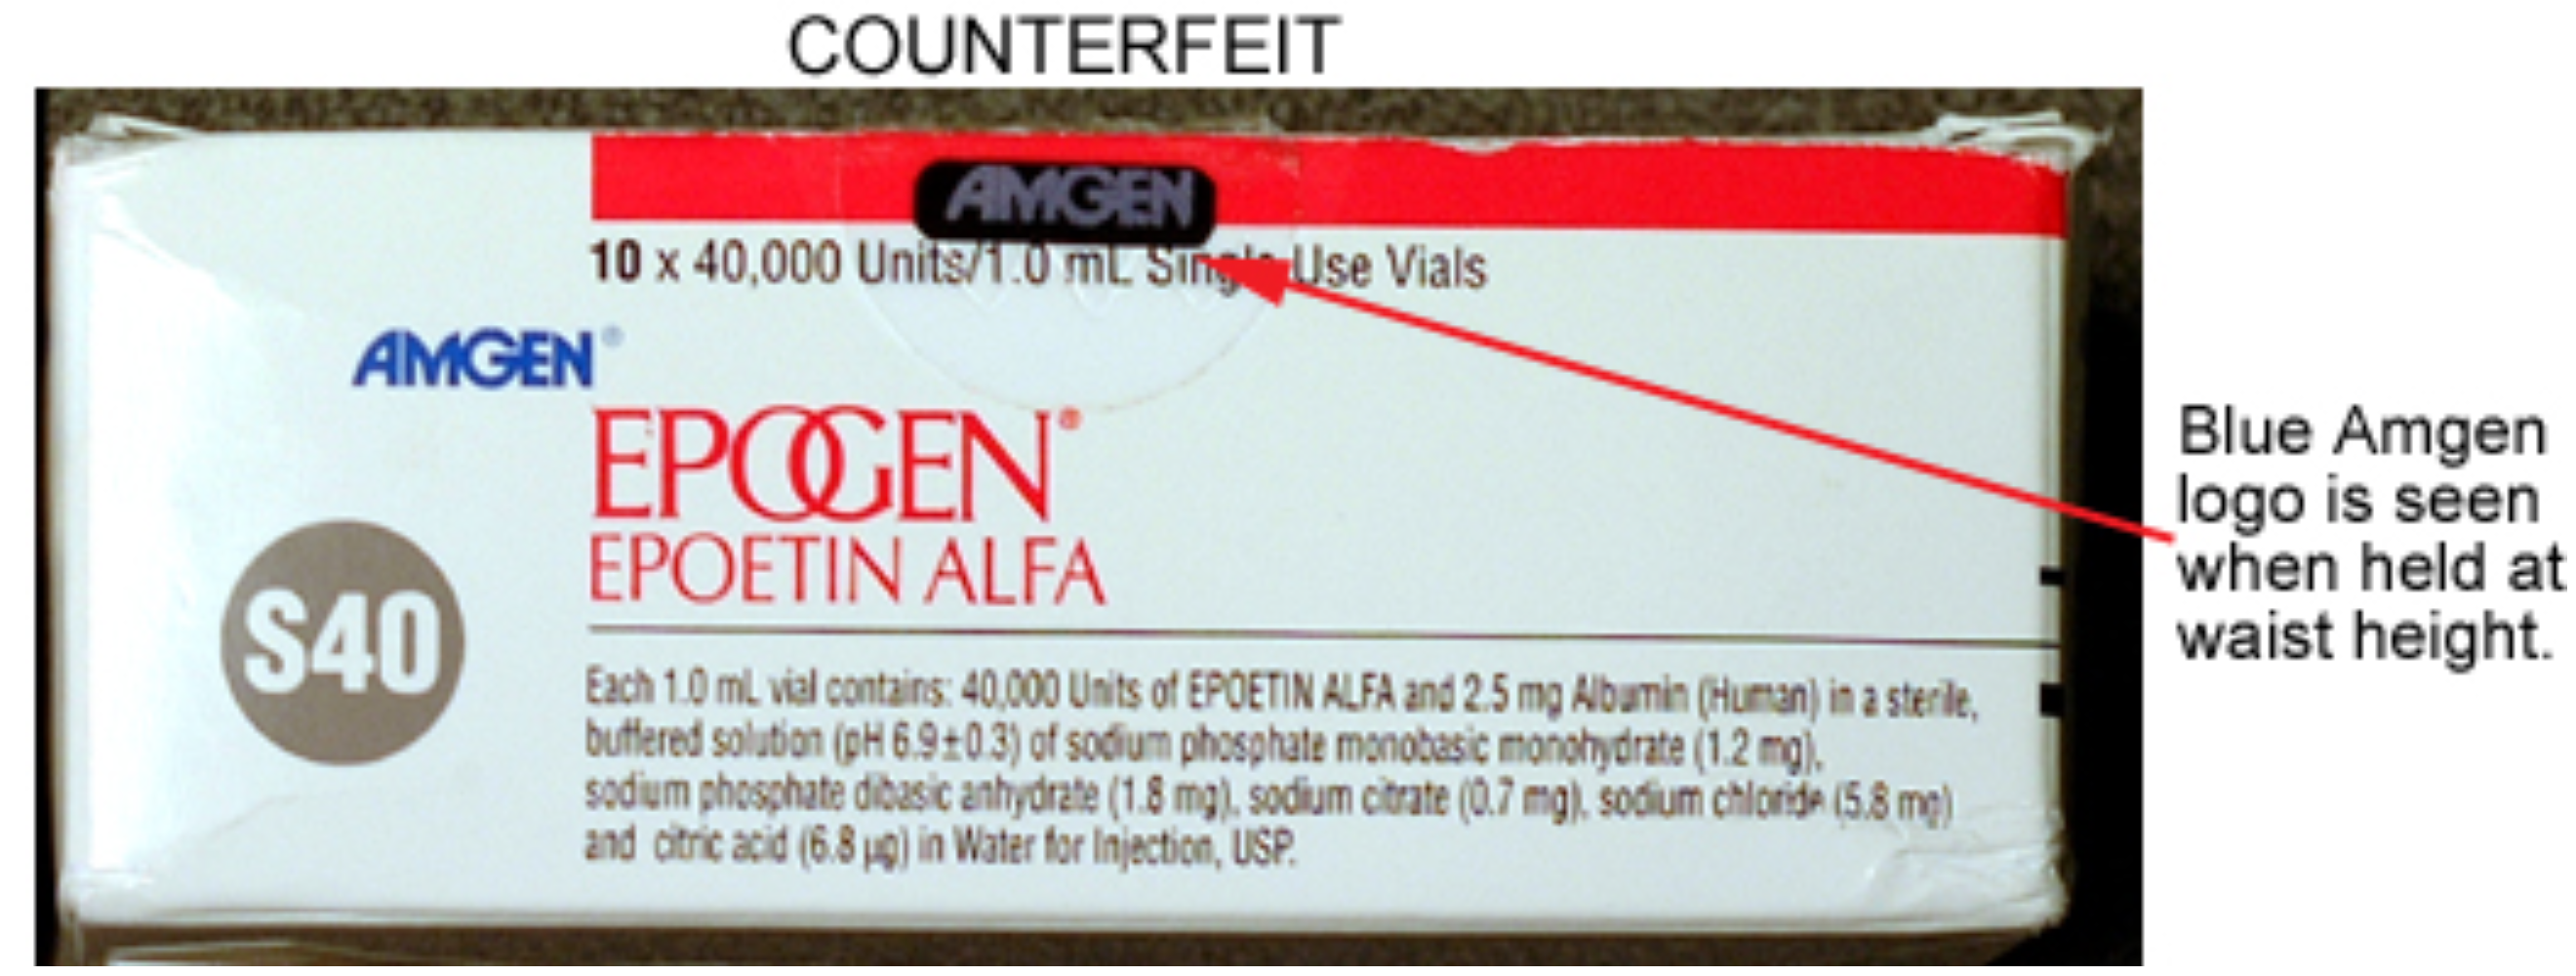 A counterfeit box of Epogen